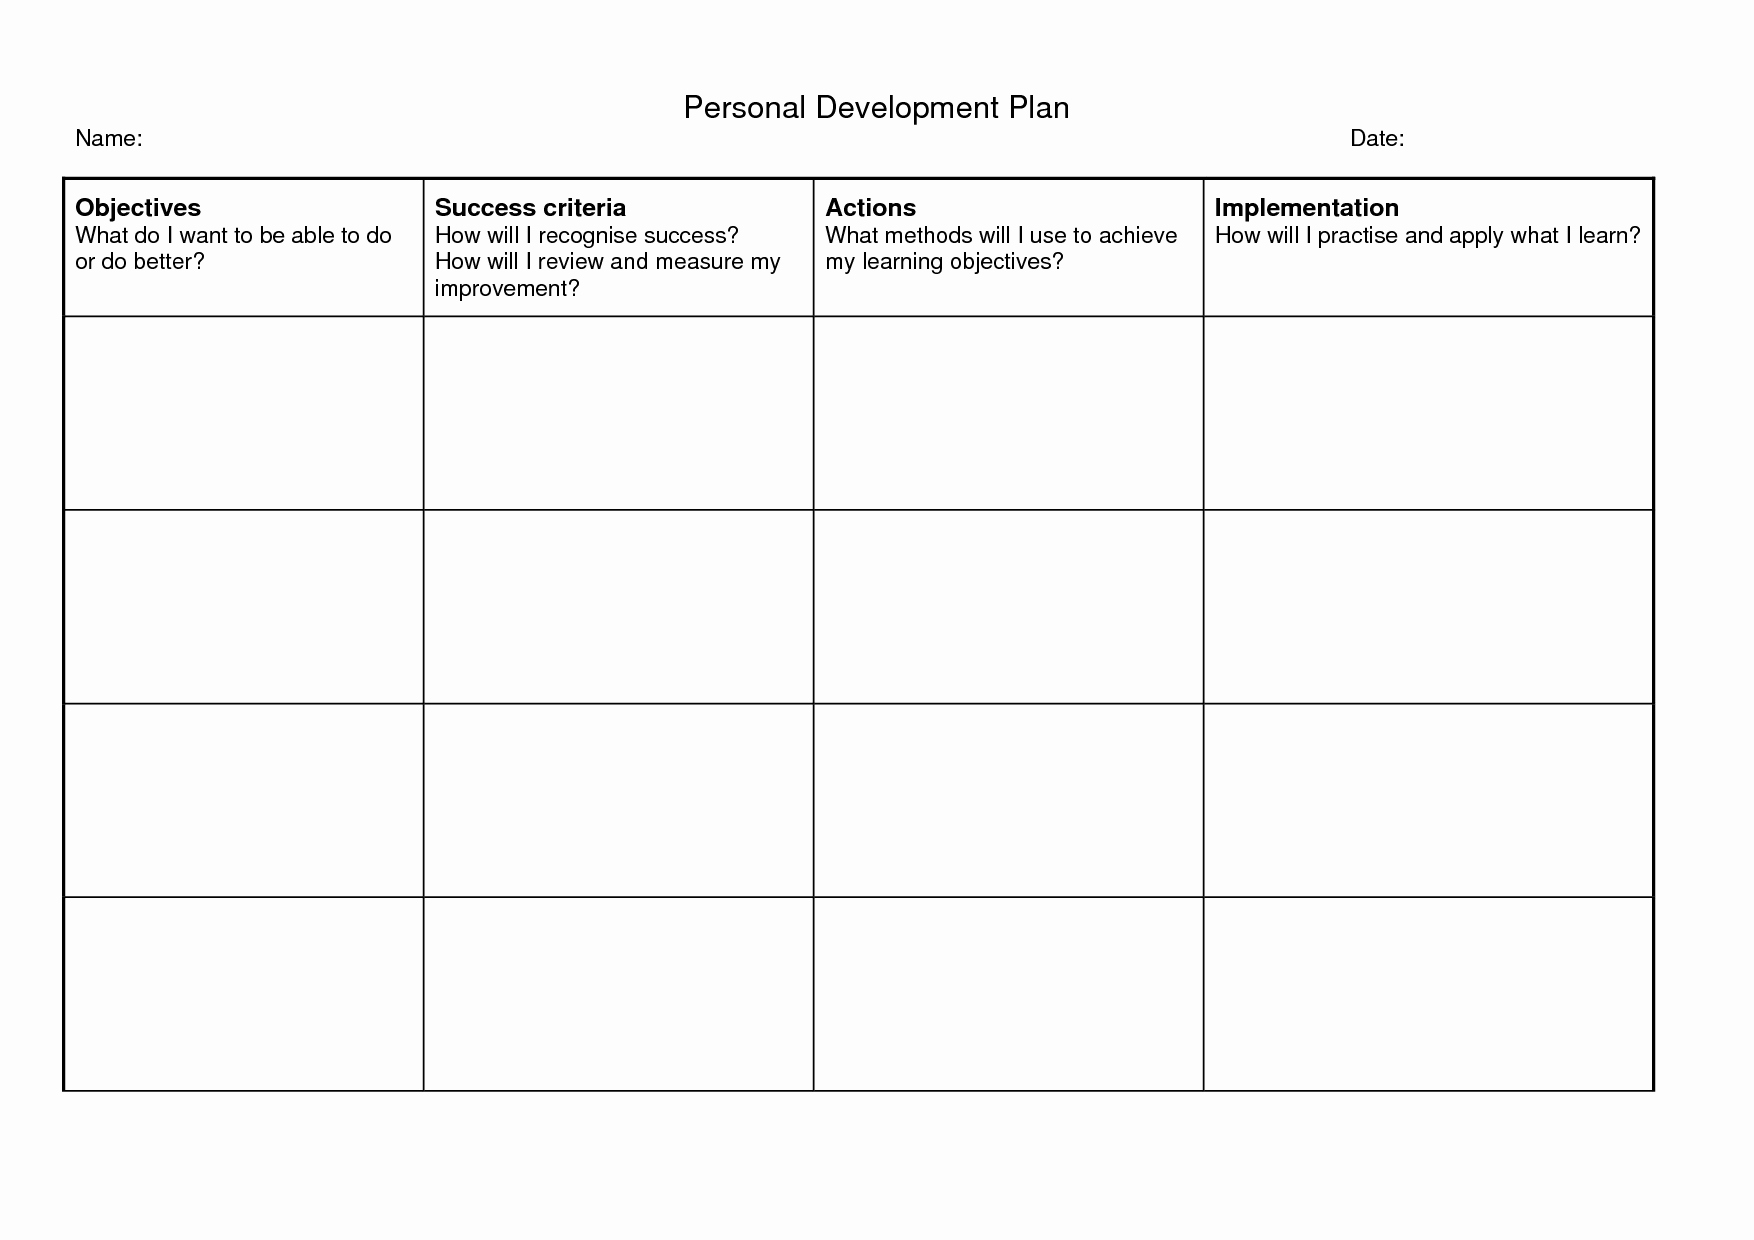 Personal Development Plan Template Lovely Create Your Personal Development Plan